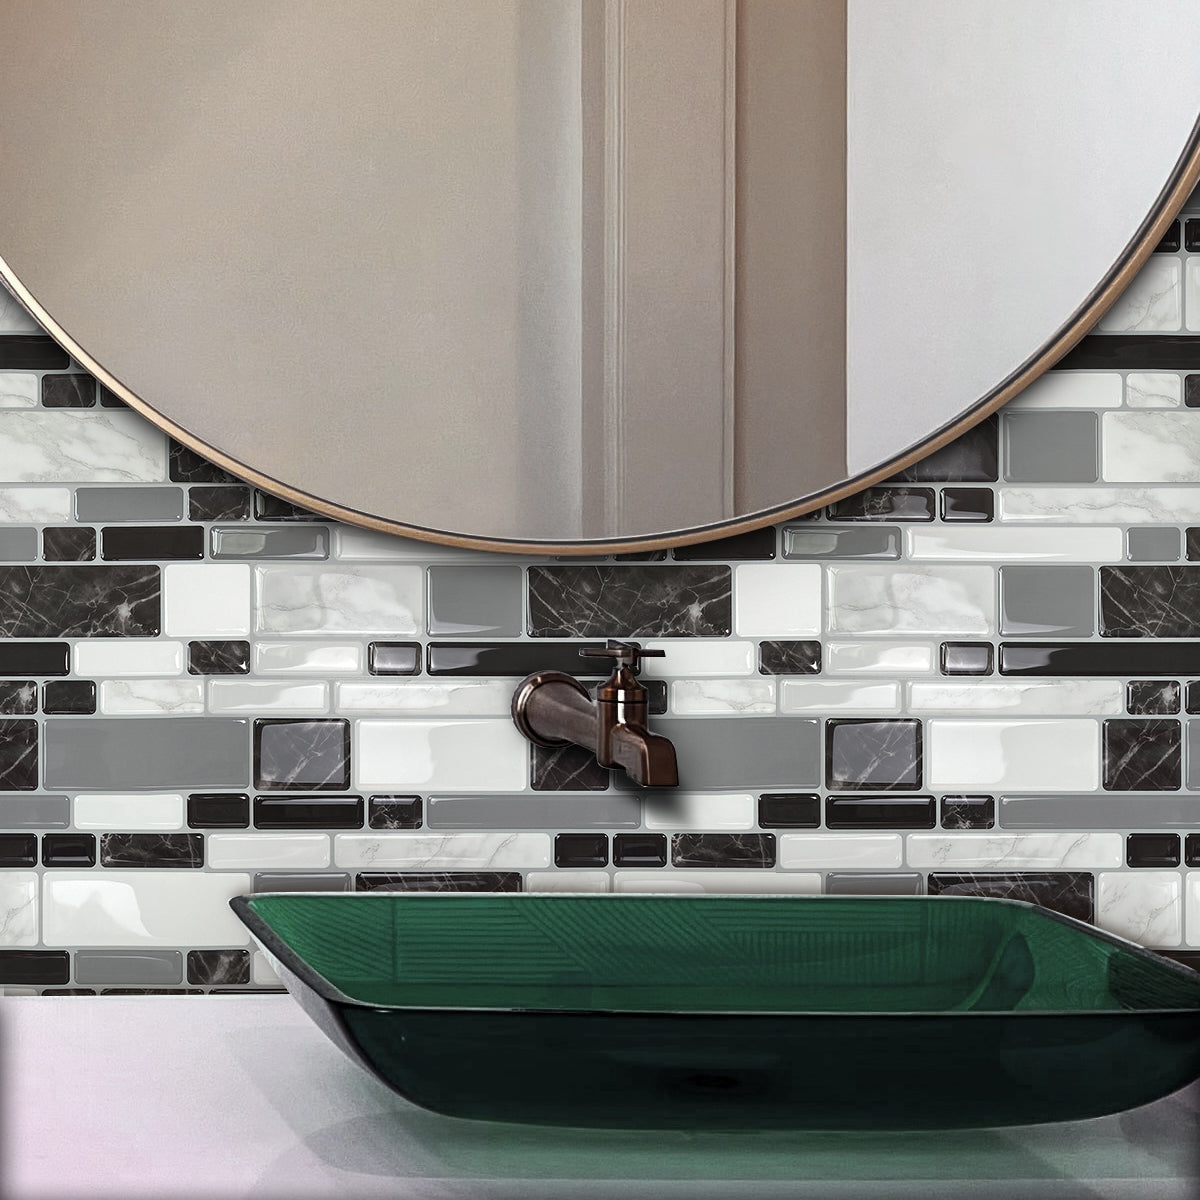 10-Sheet Mosaic Tiles Peel and Stick Backsplash Kitchen (Thicker Design 2.5mm)